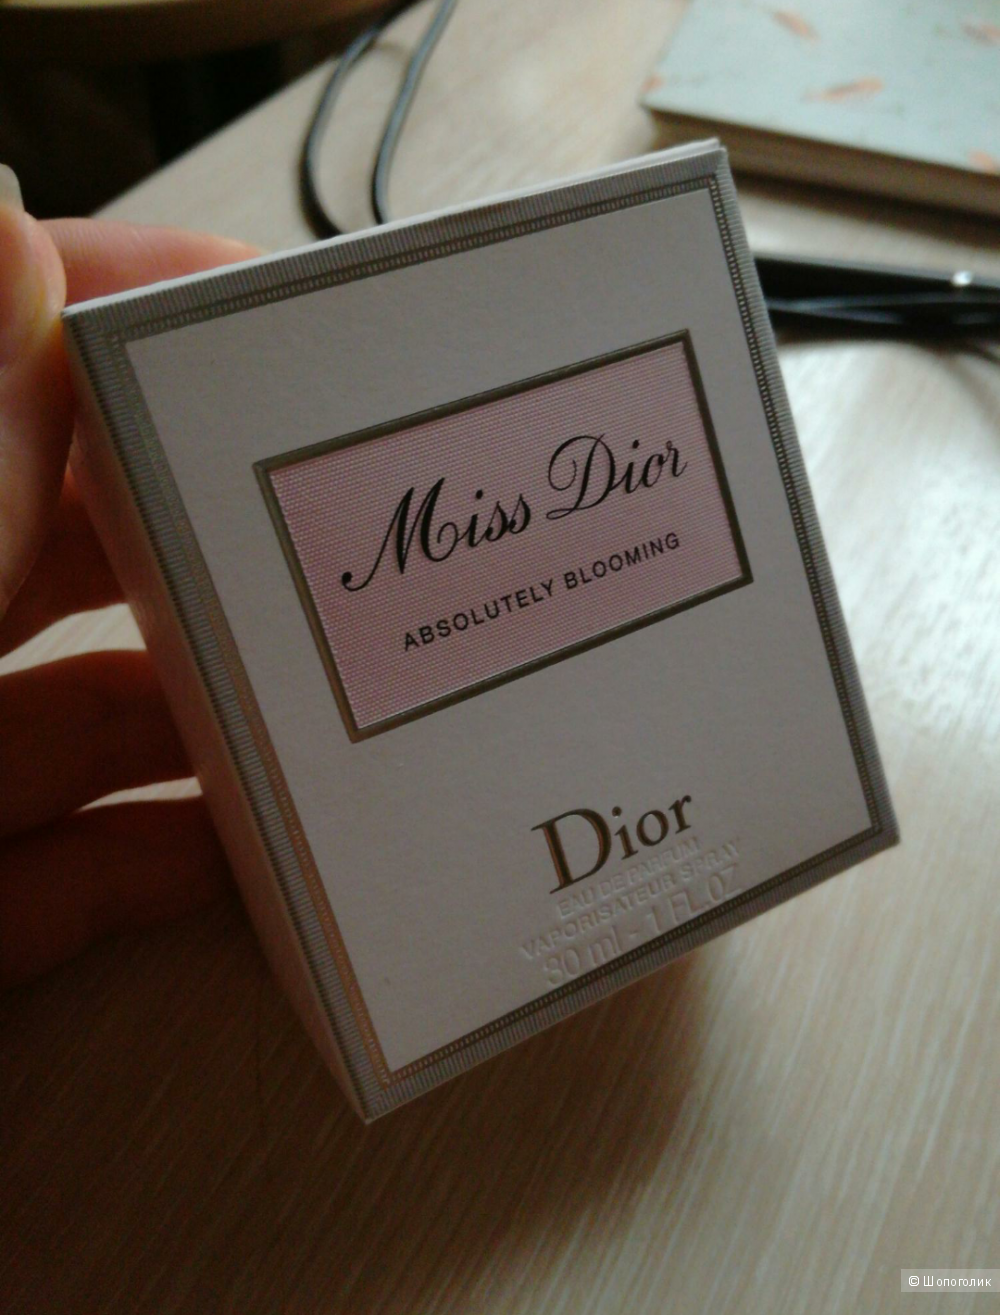 Miss Dior Absolutely blooming суперстойкий приятный парфюм